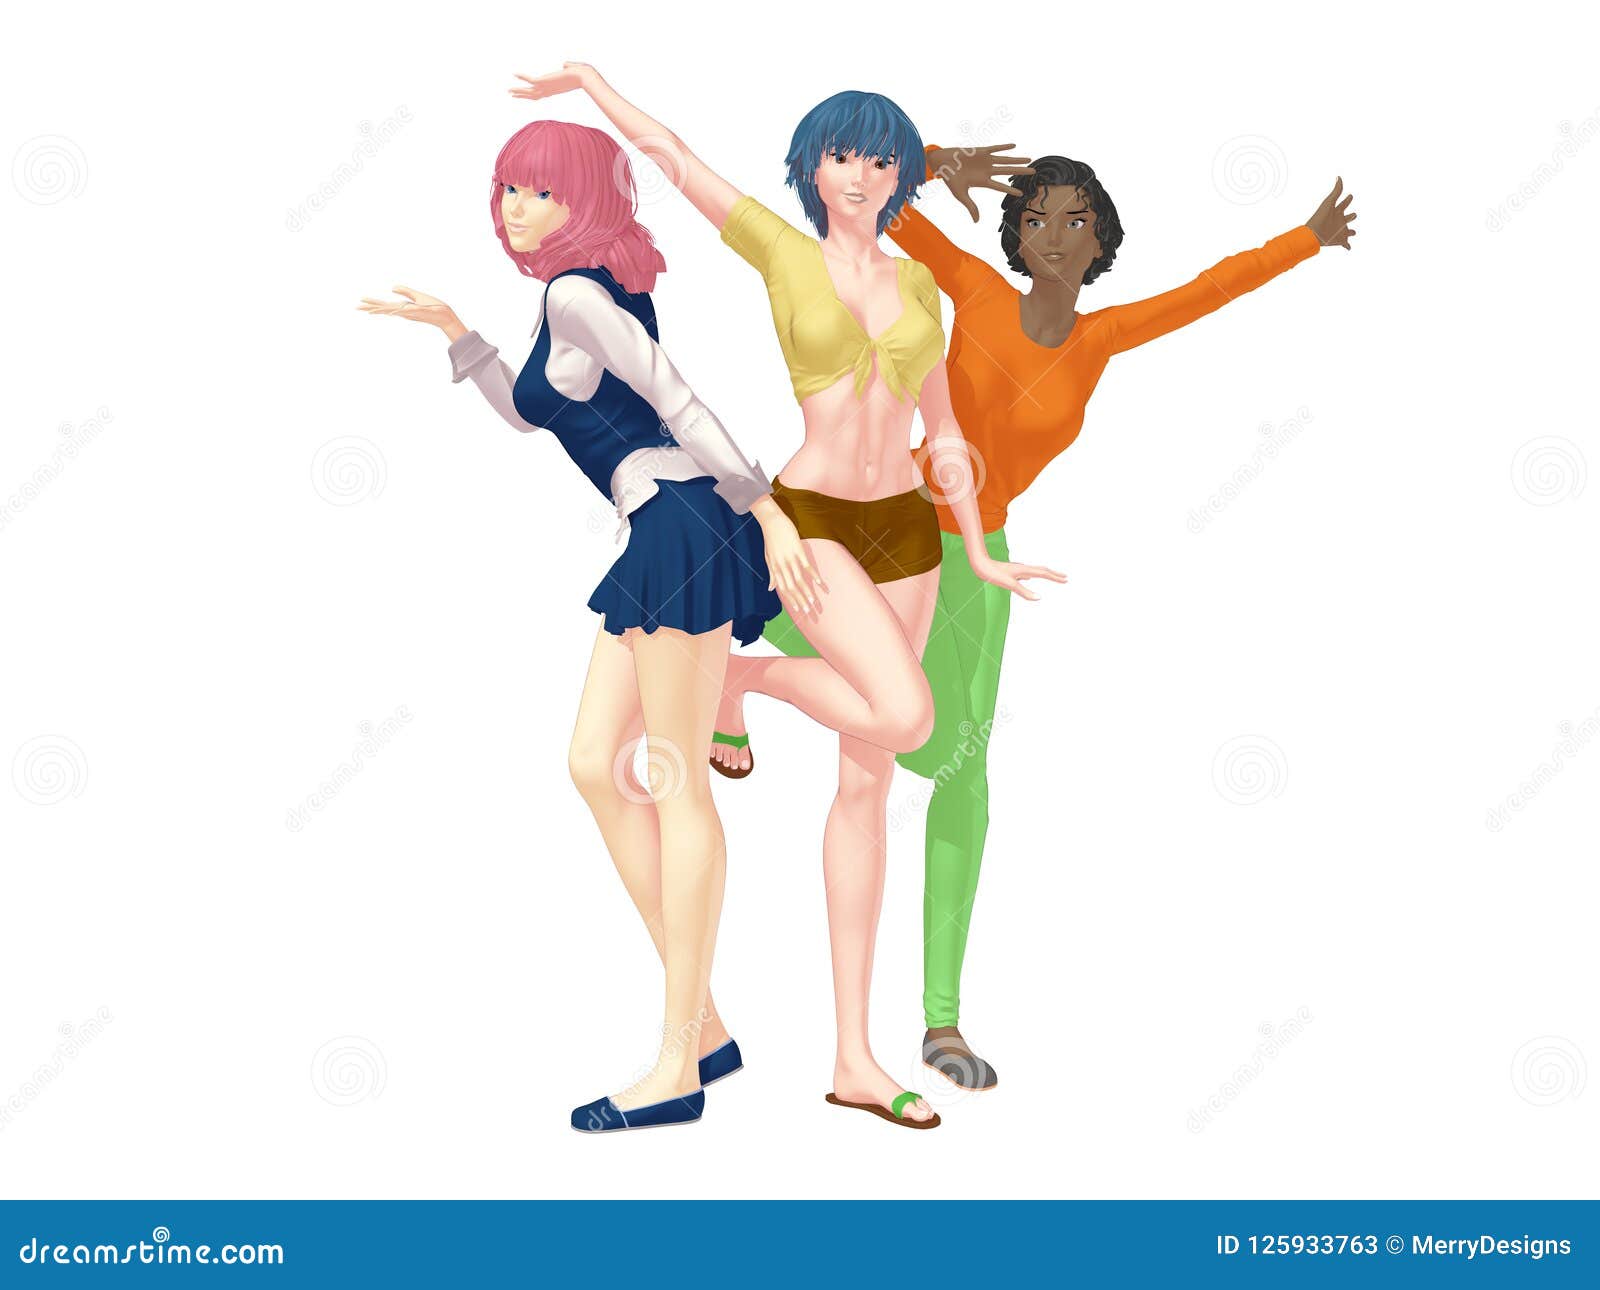 Cute Anime Girl in a Short Skirt Having Fun with Her Friends Stock  Illustration - Illustration of anime, love: 125933763